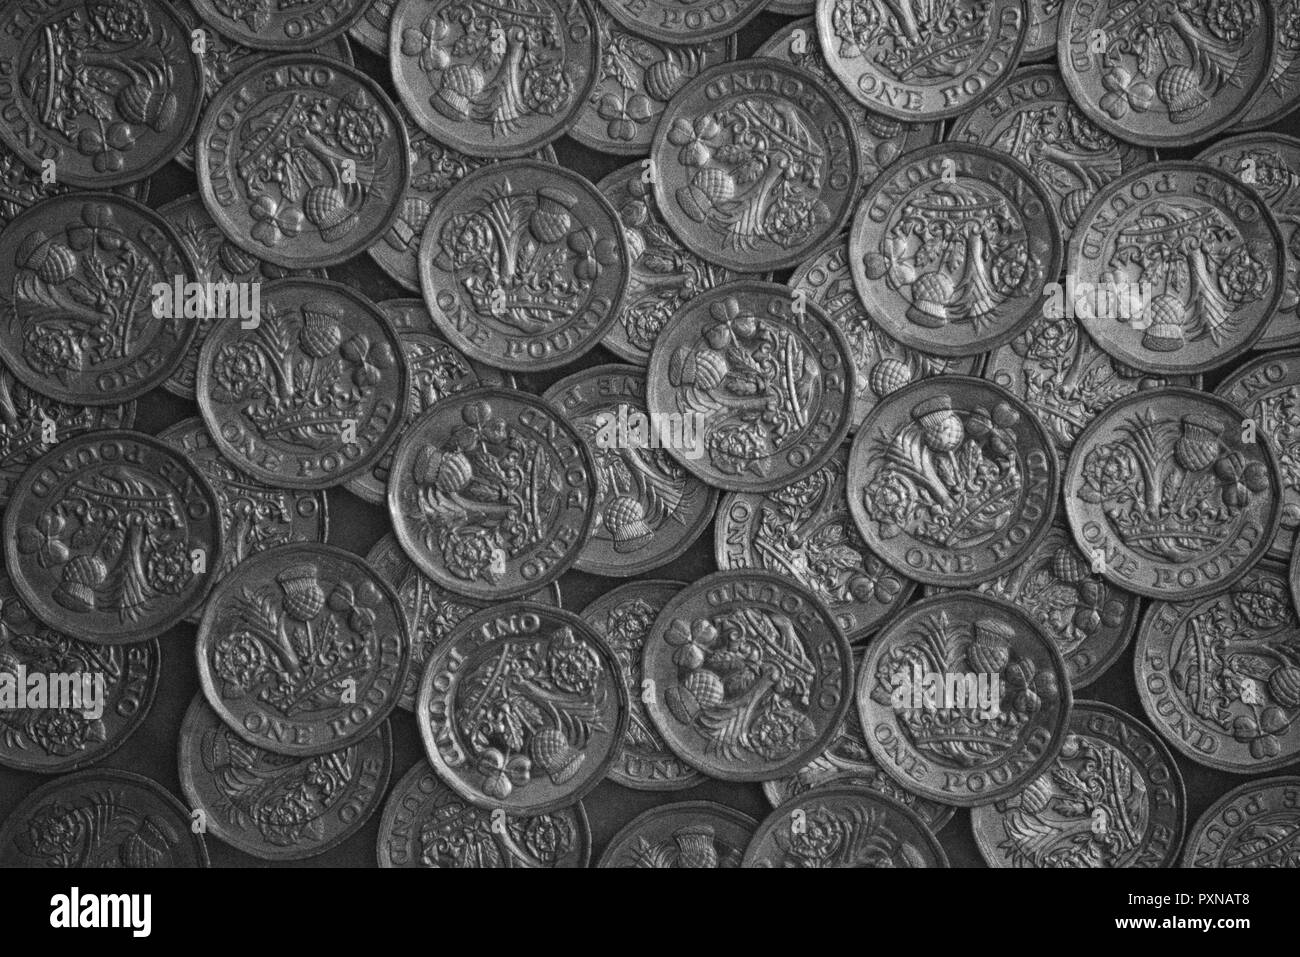 British one pound (£1) coins Stock Photo